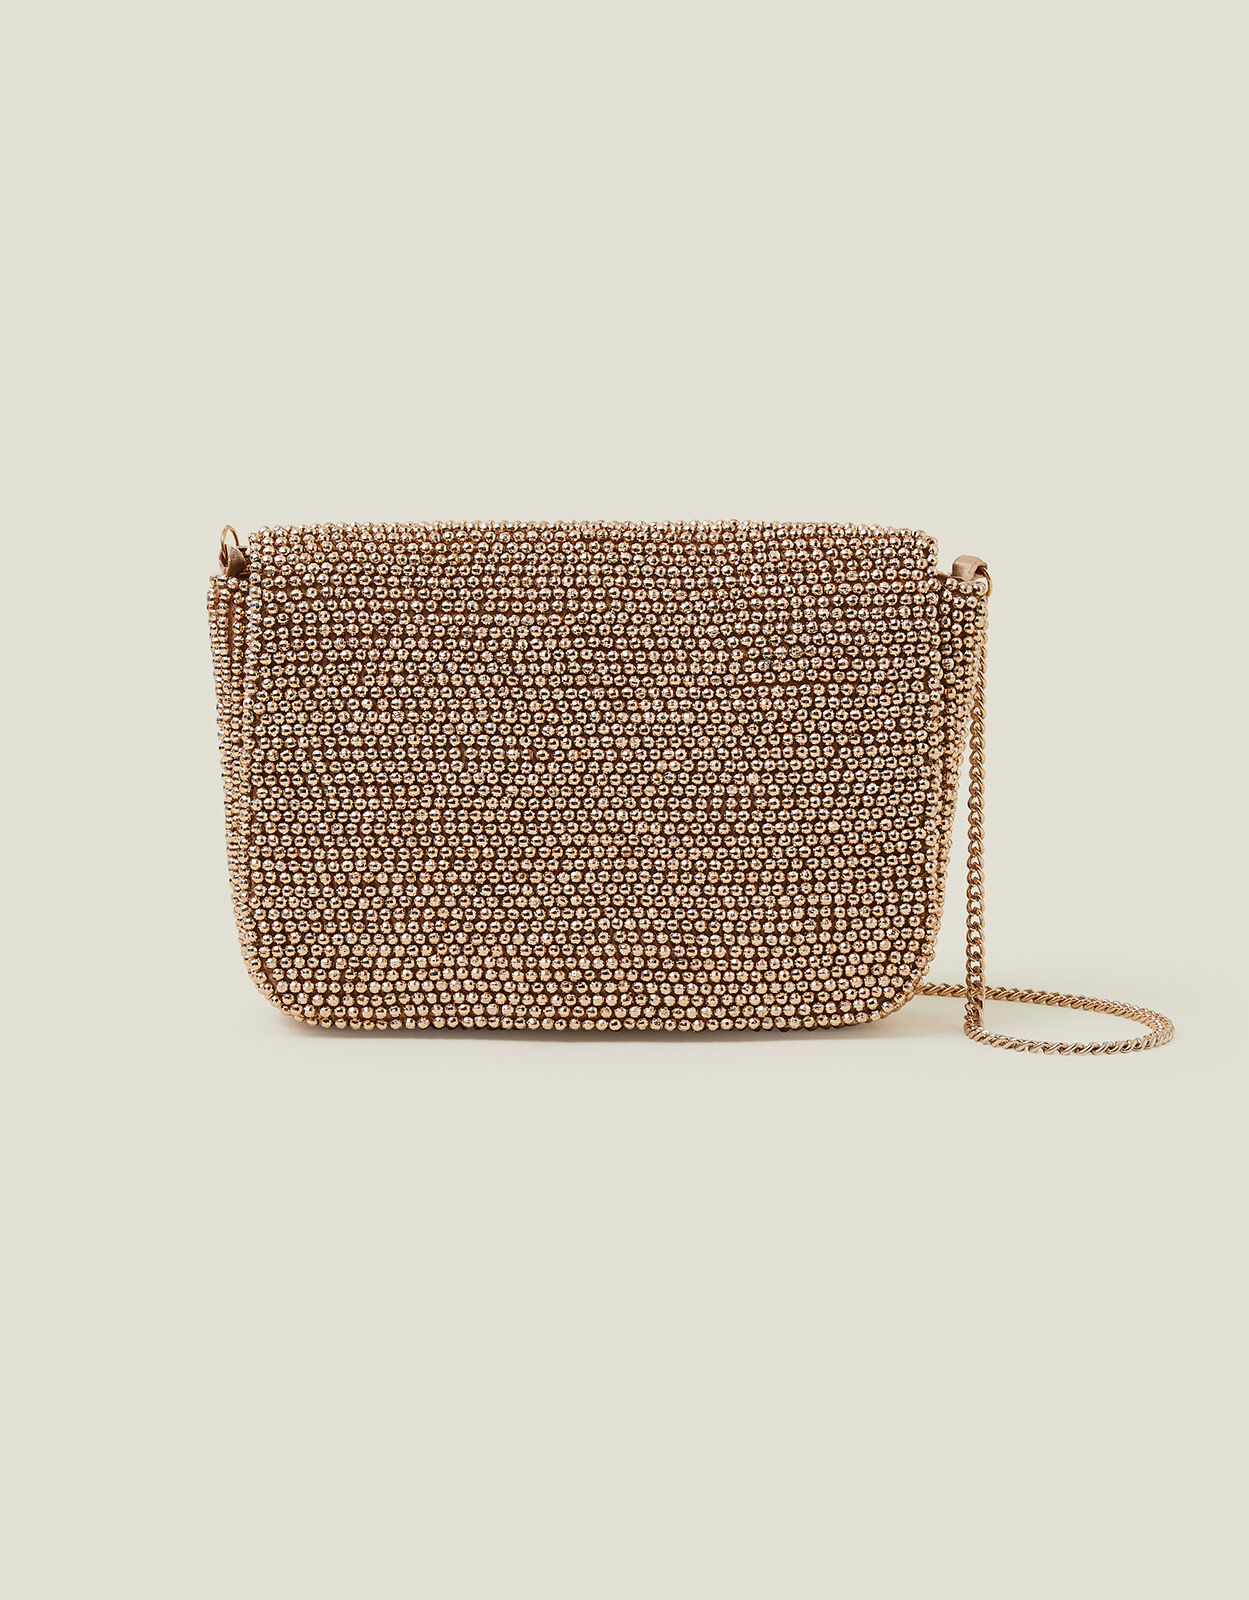 Women's PU Leather Vintage Inspired Large Coin Purse Clutch Handbag | eBay